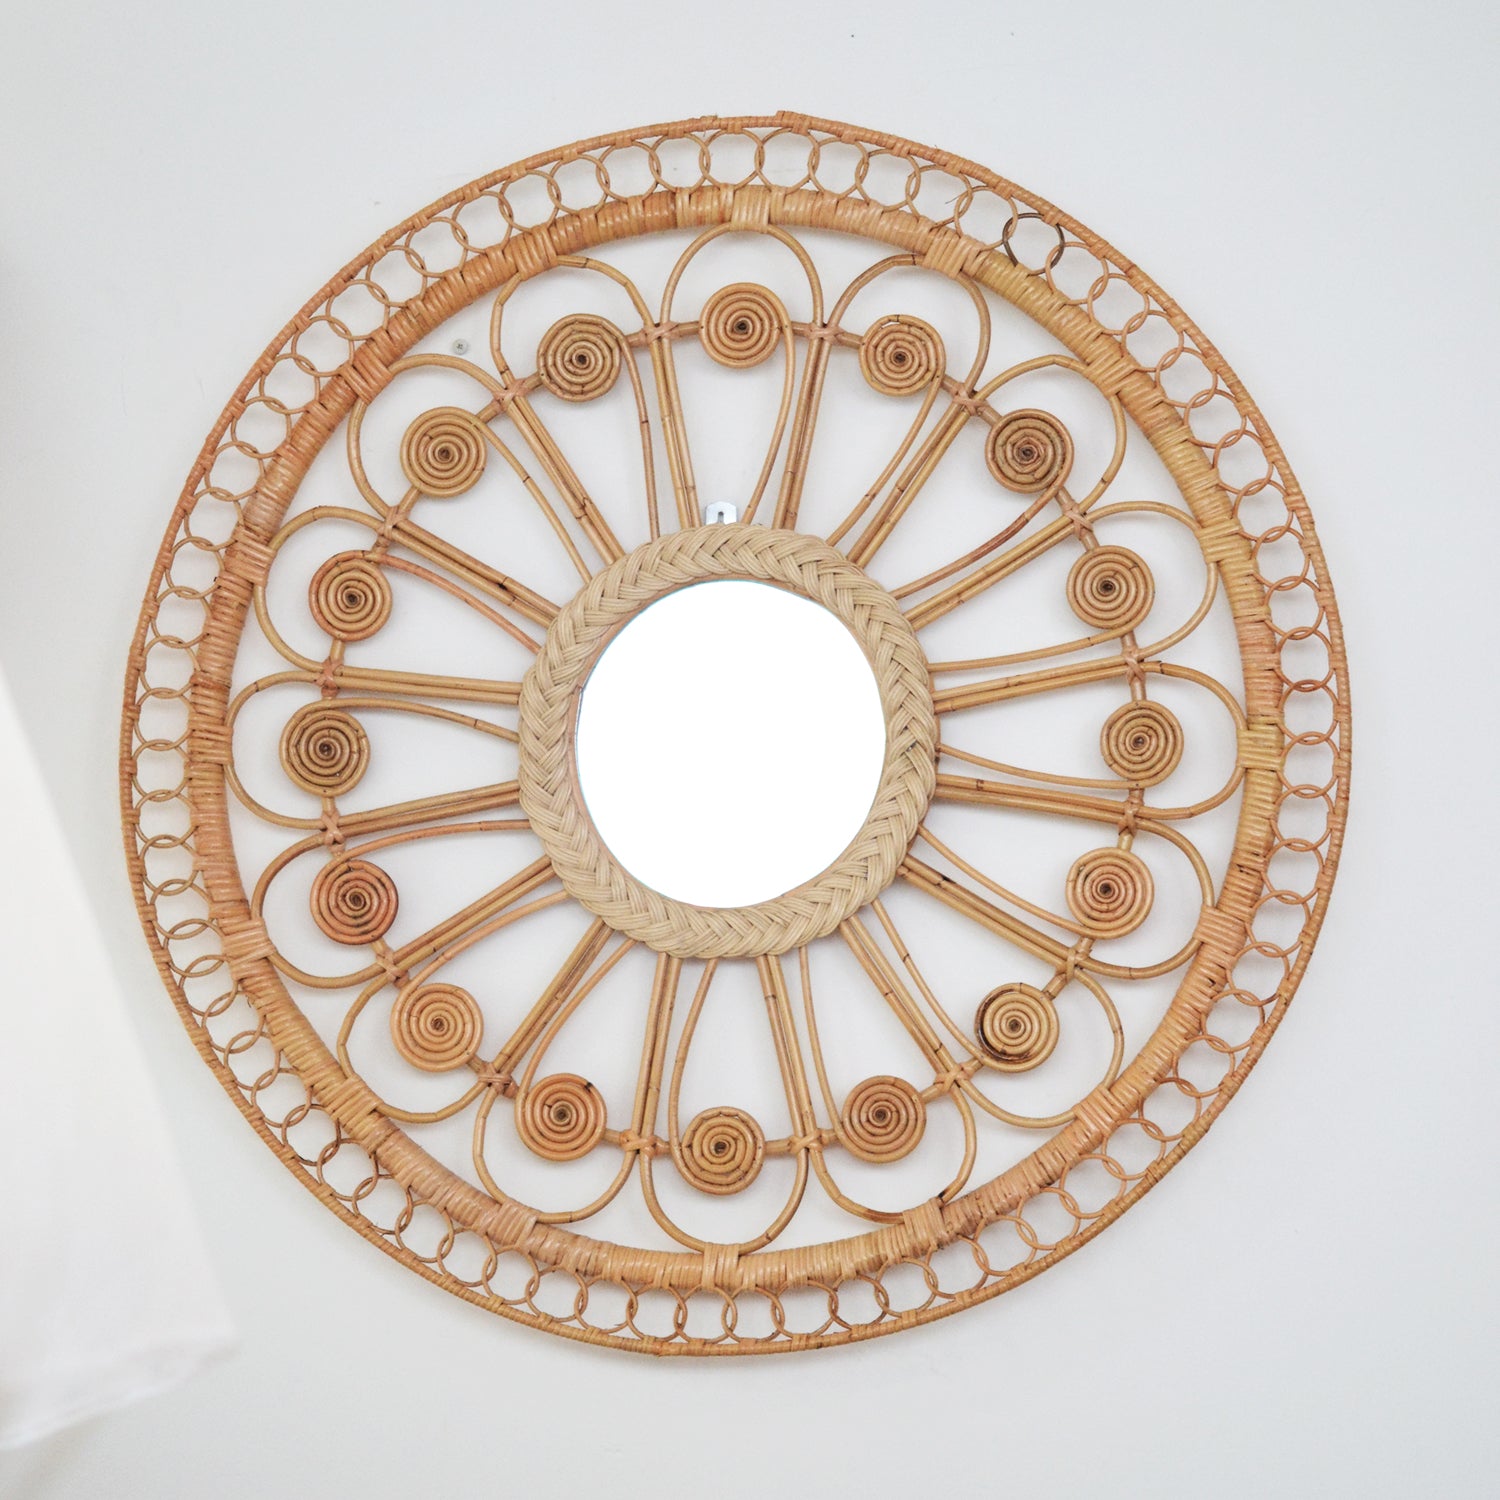 PREORDER - Natural Decorative Round Rattan Mirror 90cm Dia